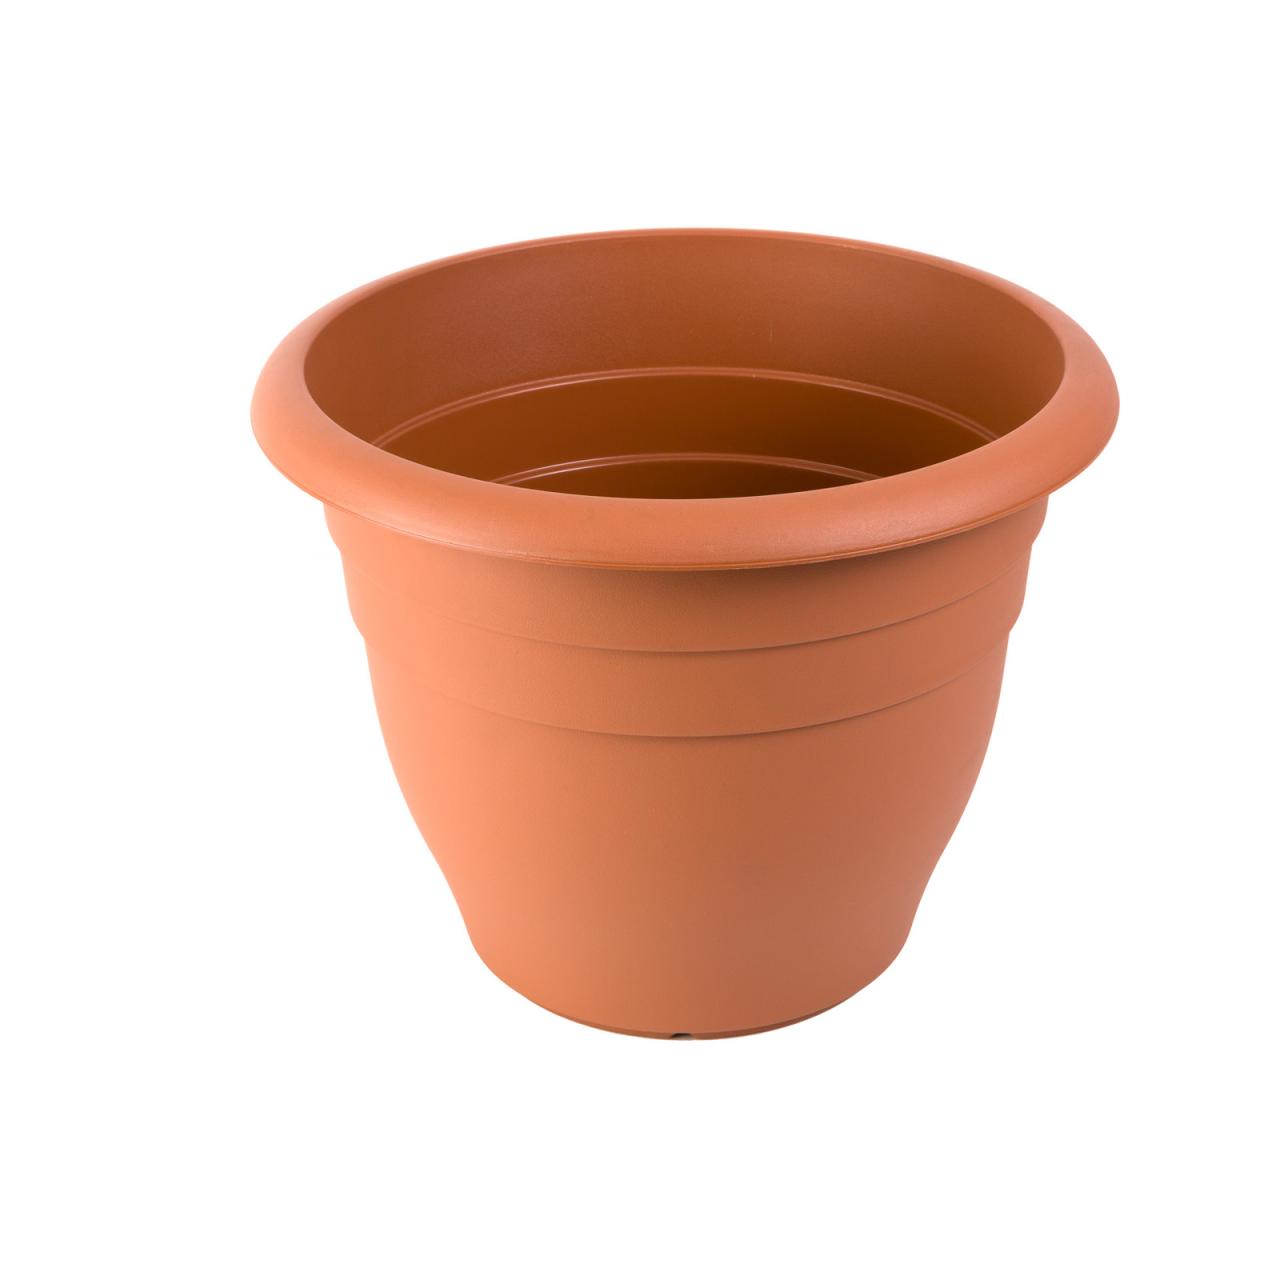 Hanging Plants Indoor | Bunnings Northcote Pottery Plastic Pots: Durable and Versatile Gardening Solutions